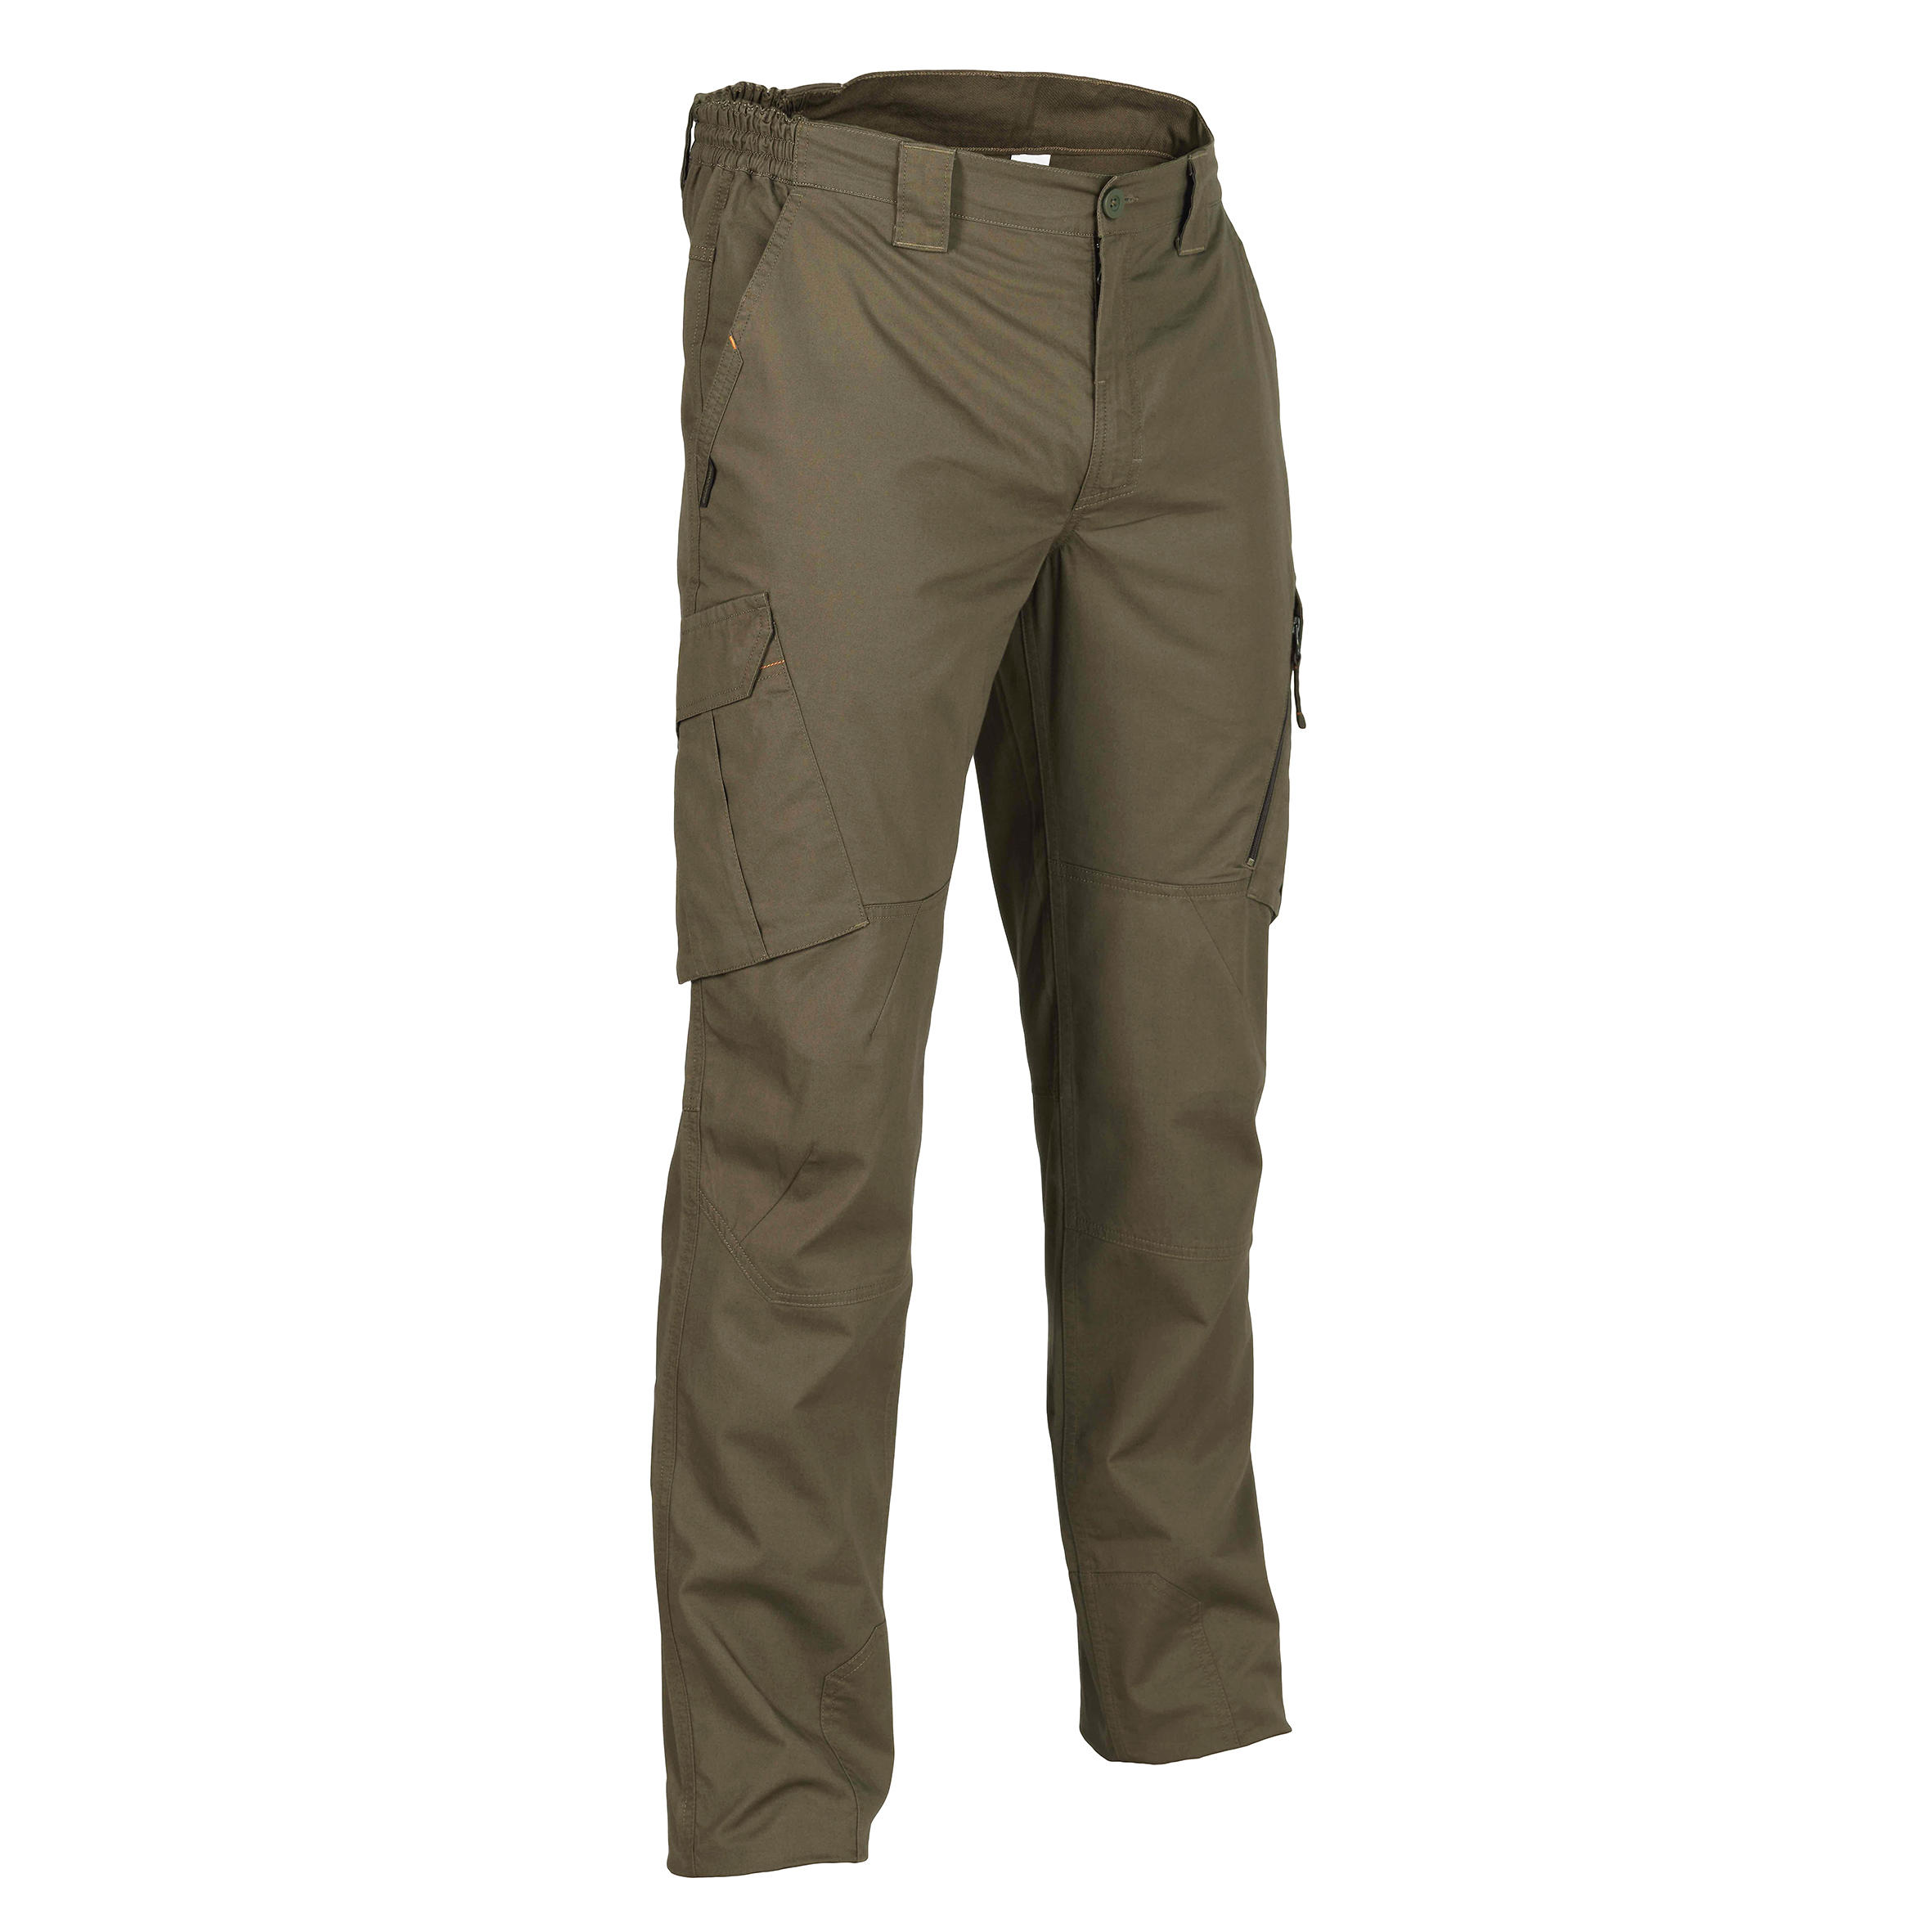 Sapper Cargos  Buy Sapper Six Pockets Cargo Pants For Men  Light Green  Online  Nykaa Fashion